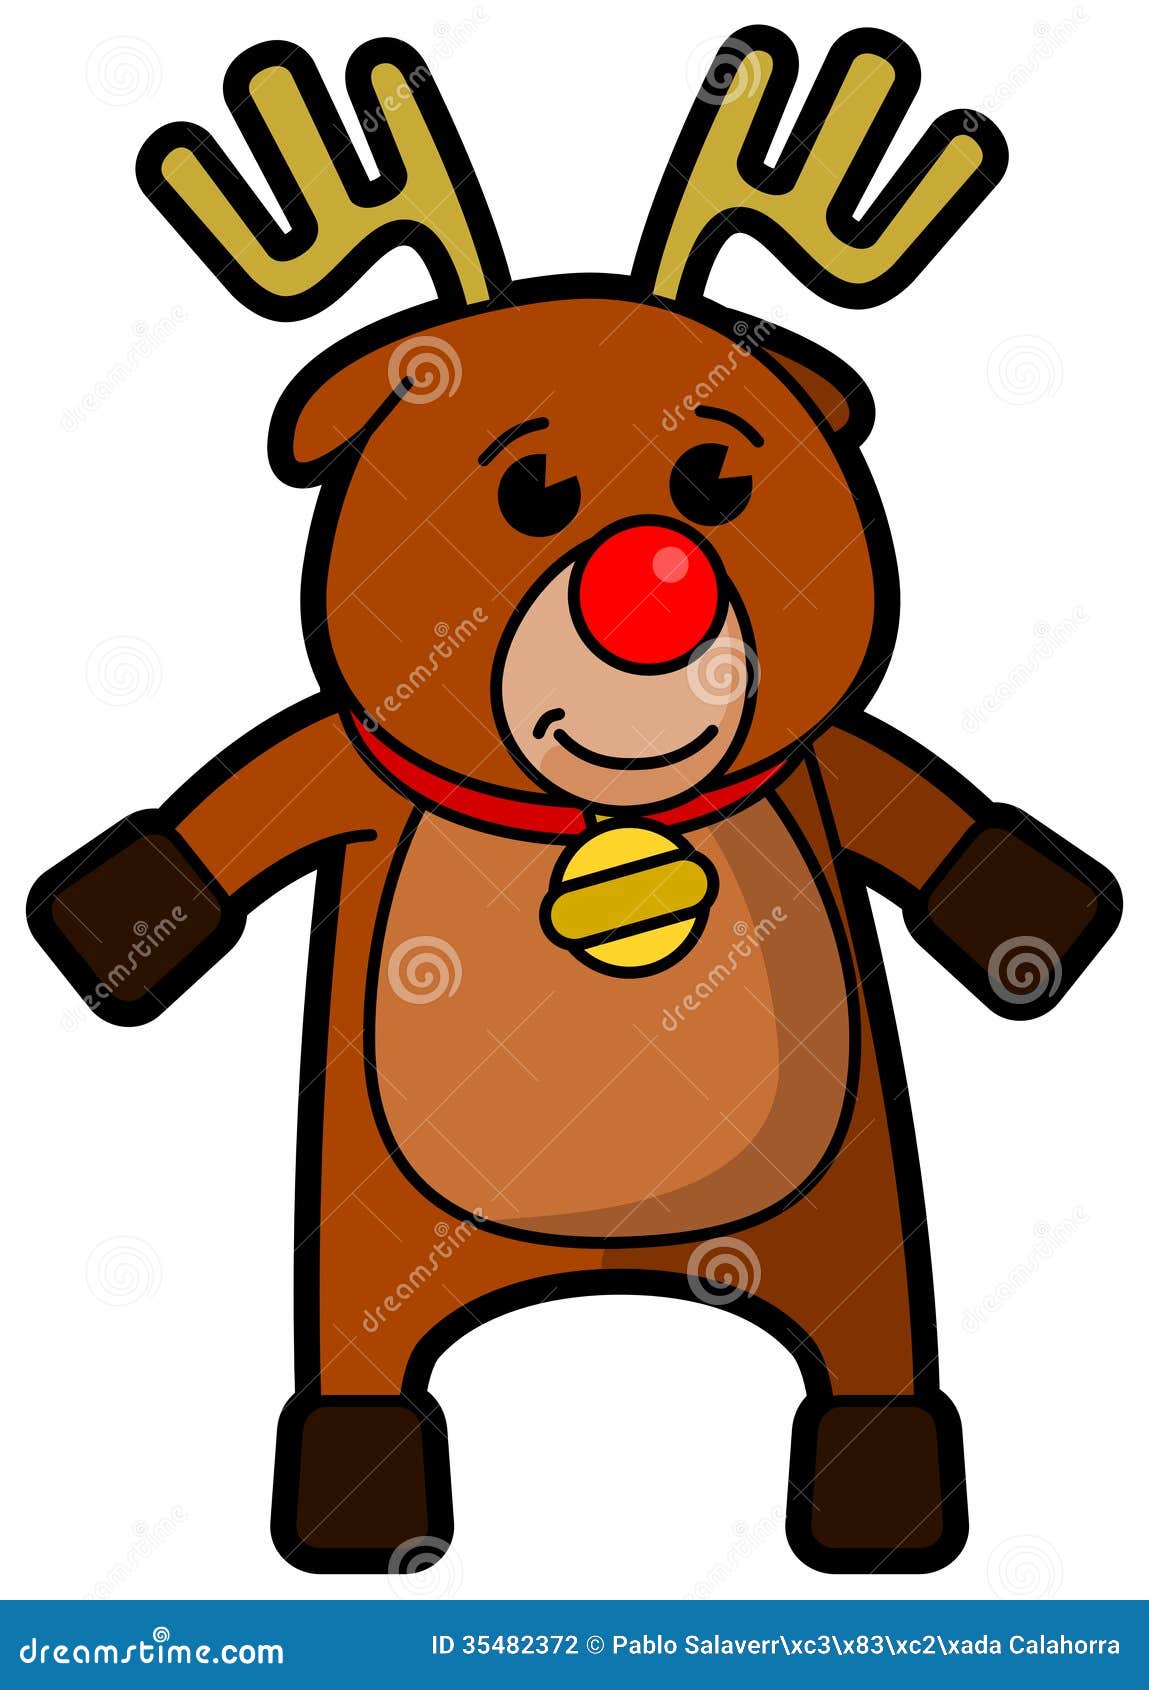 Reindeer stock vector. Illustration of clipart, brown - 35482372